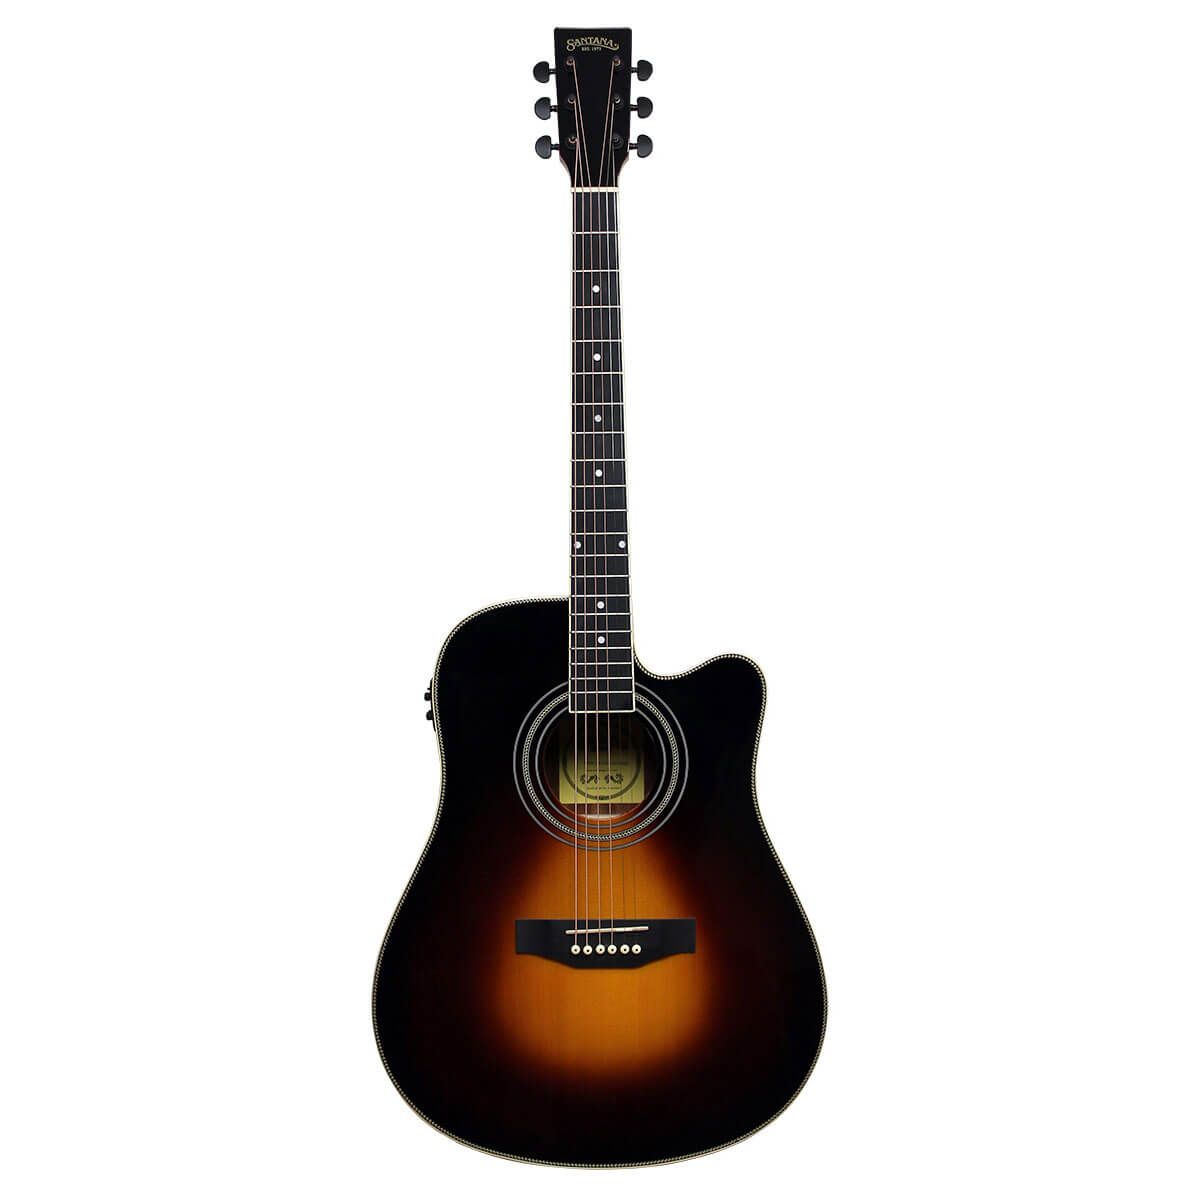 Santana LA-100EQCW-SB v2 Western guitar - Sunburst